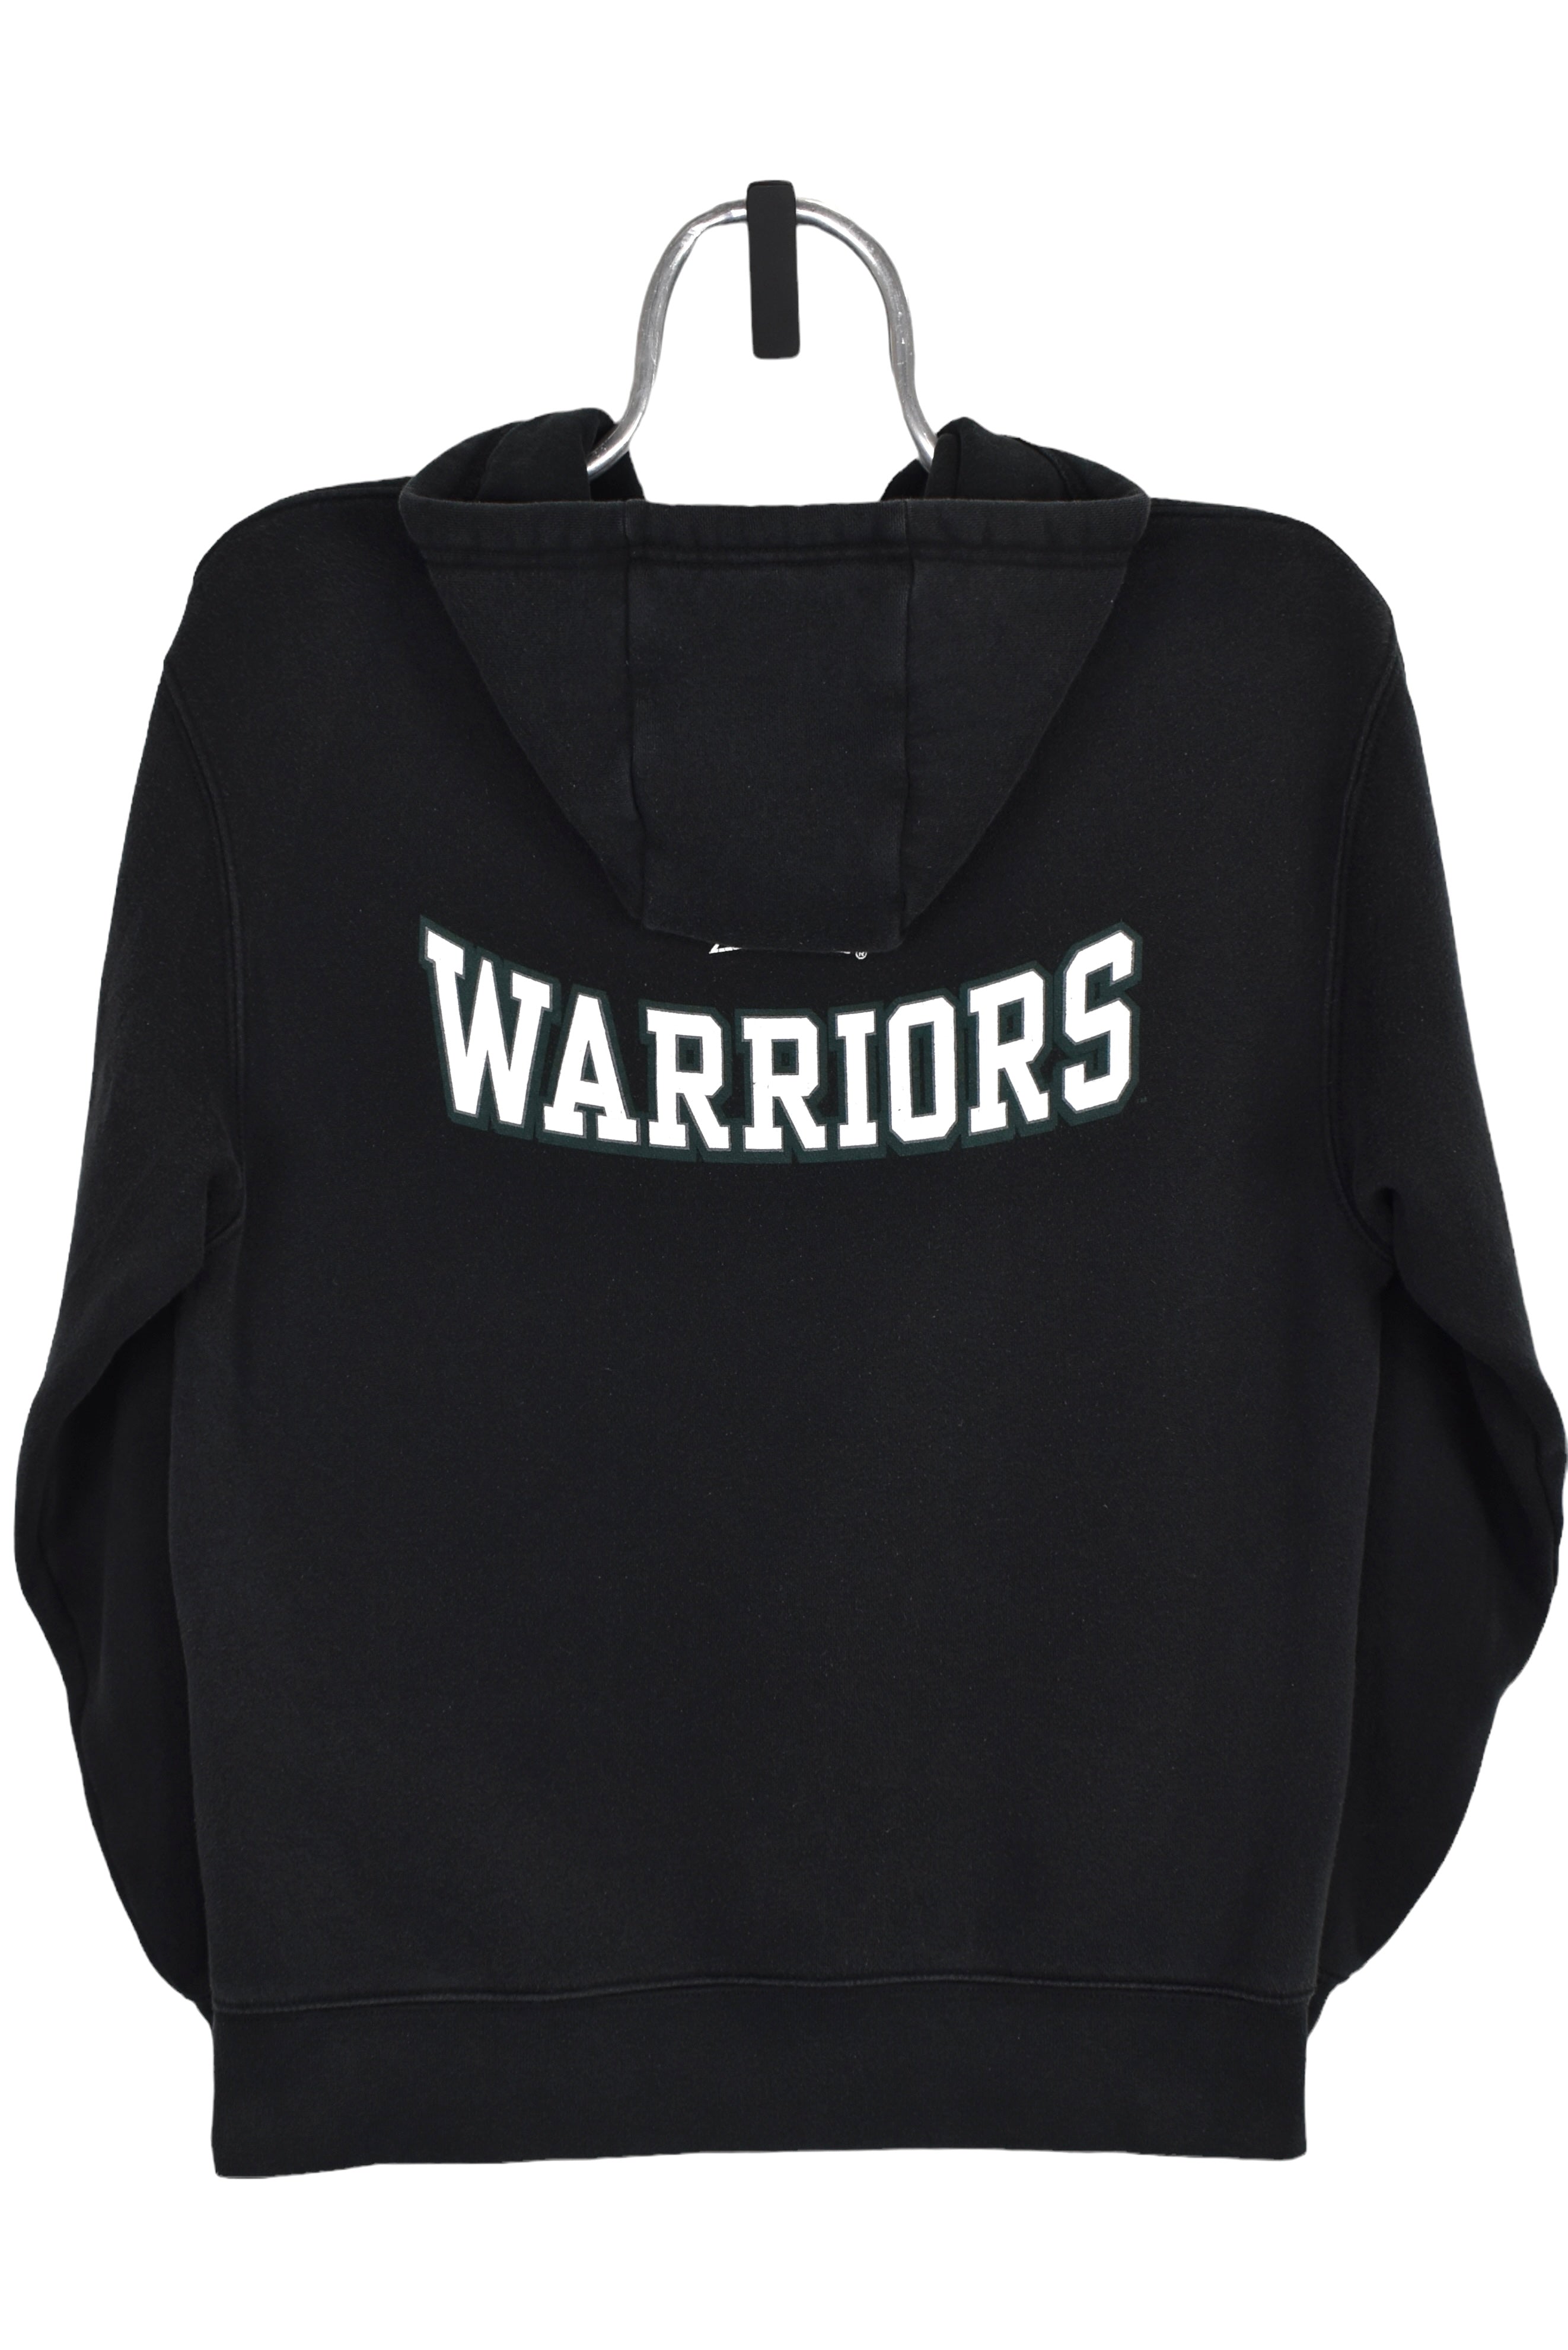 Vintage University of Hawai'i hoodie (XS), black graphic sweatshirt